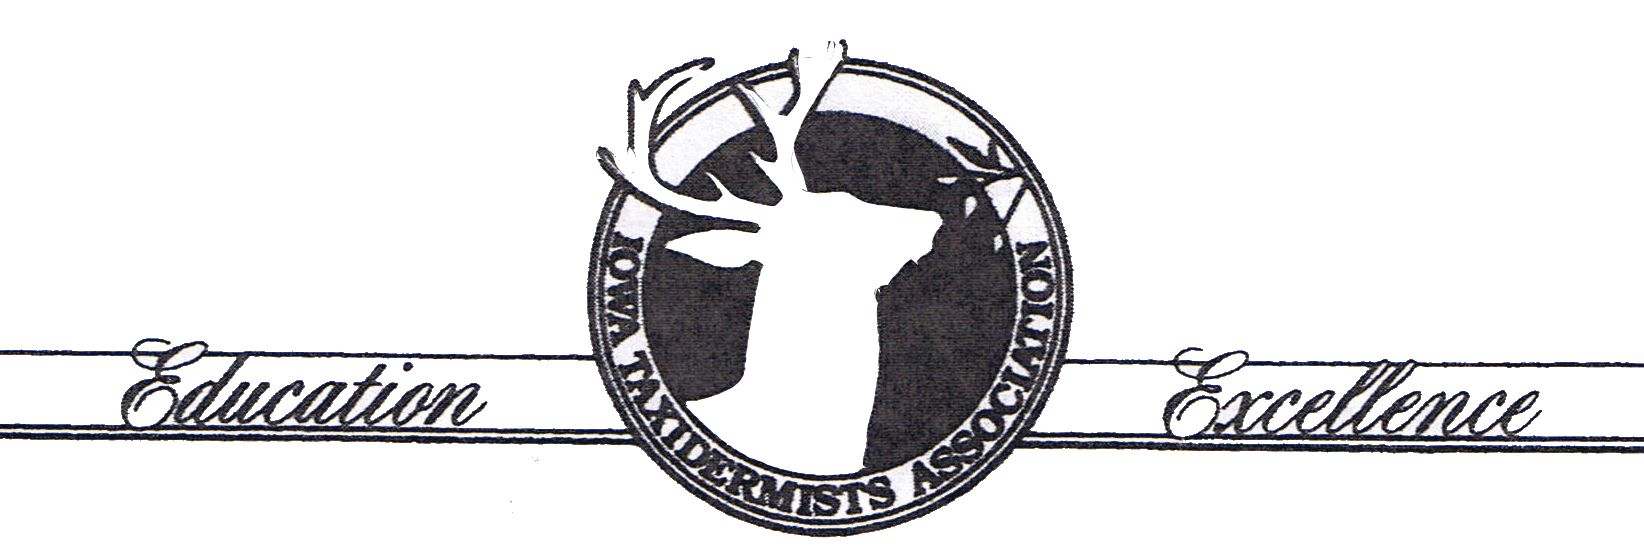 Iowa Taxidermist Association